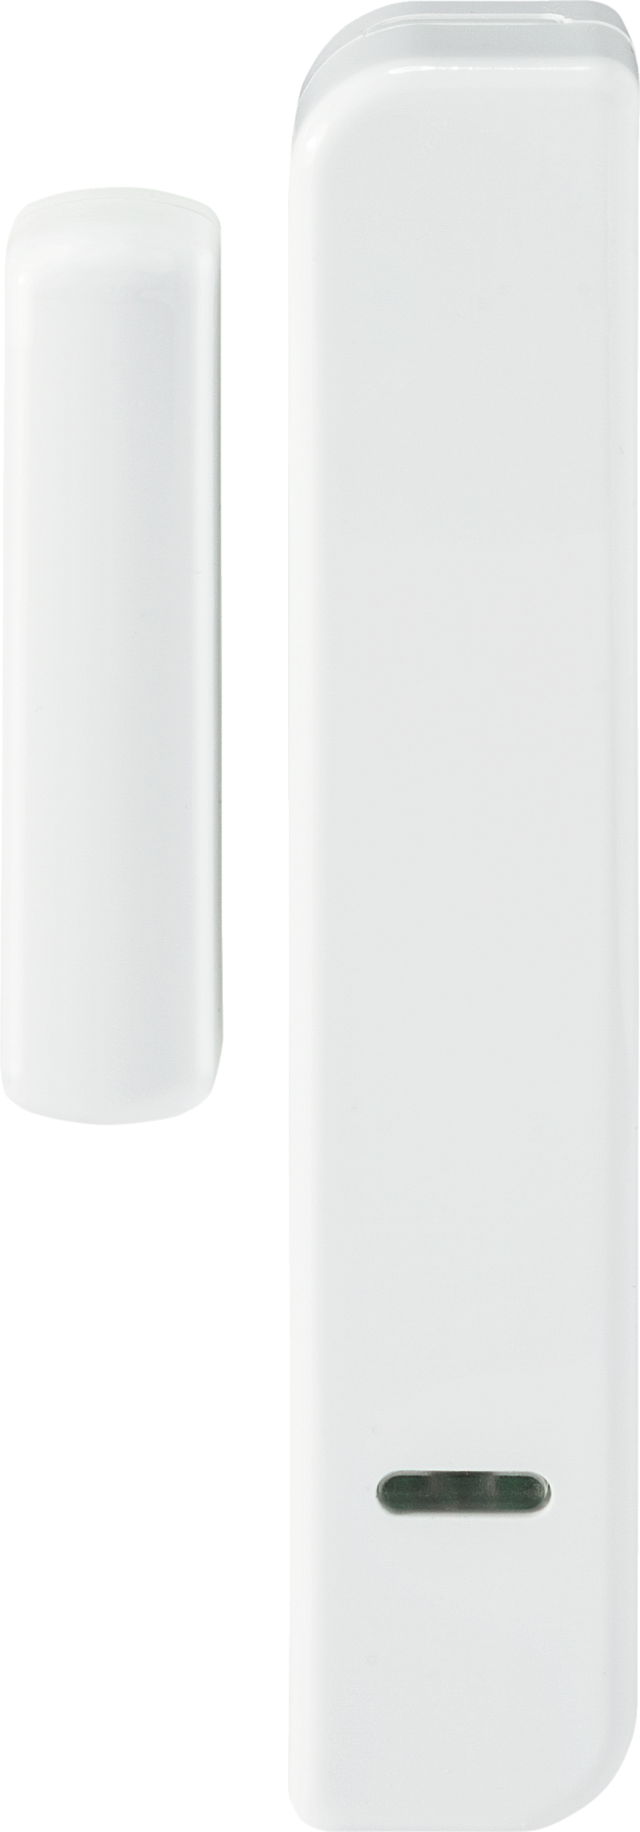 Secoris Wireless Magnetic Contact (white)